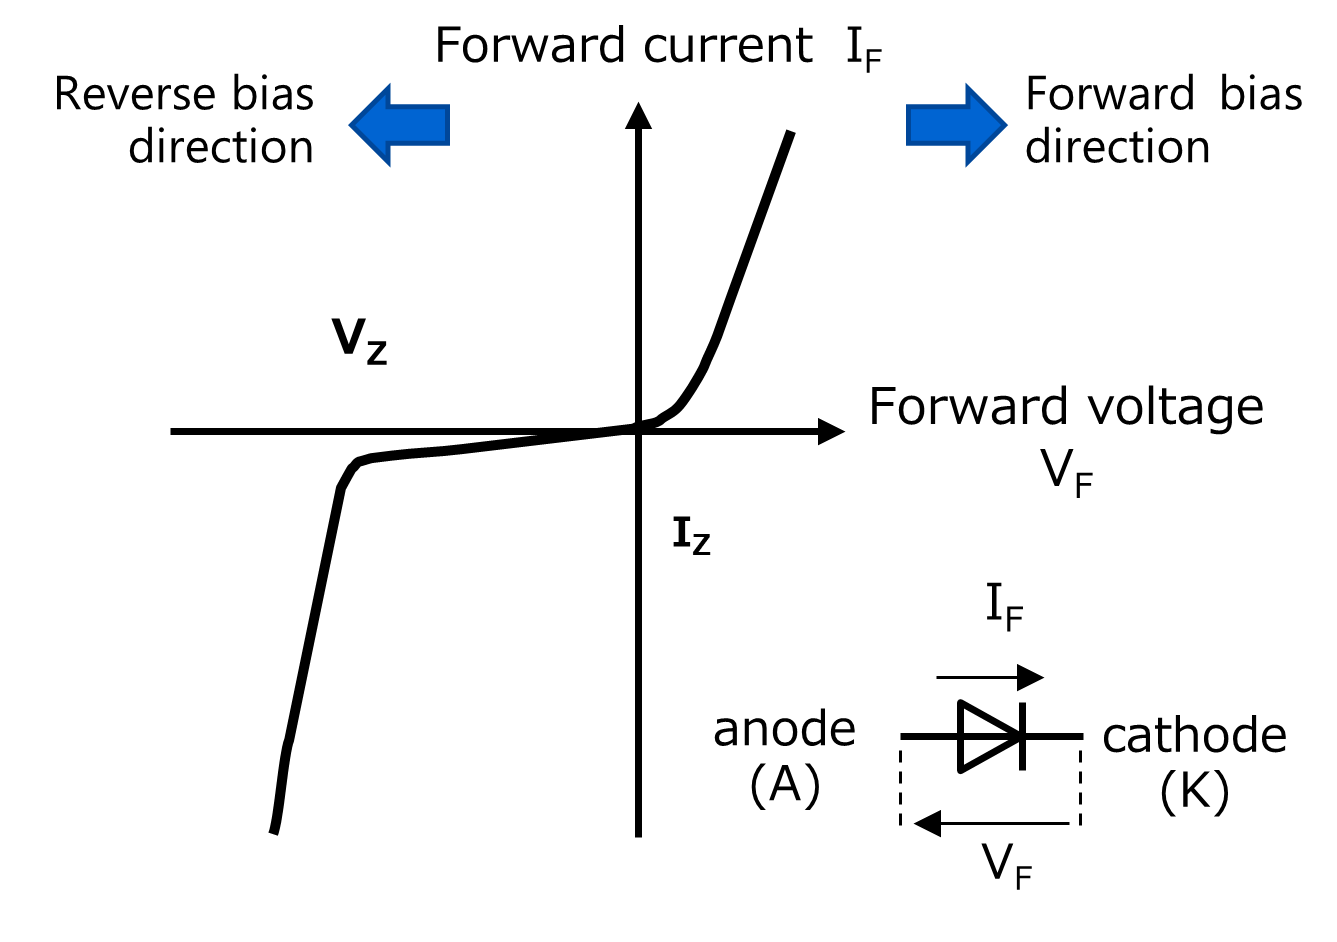 Fig. 1 Zener diode I-V characteristics